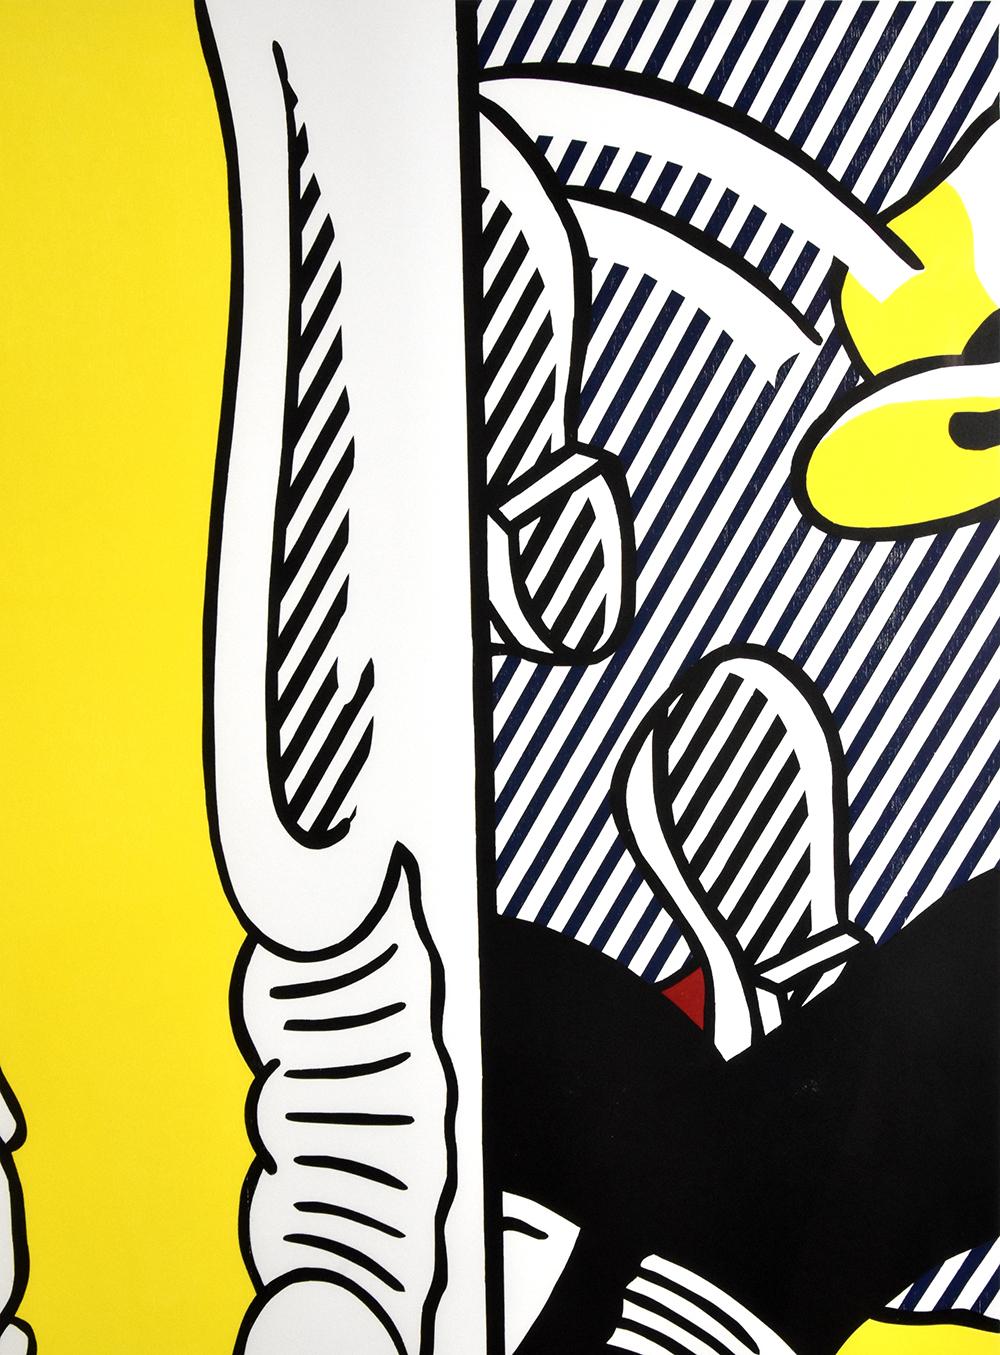 Two Paintings: Dagwood - Pop Art Print by Roy Lichtenstein